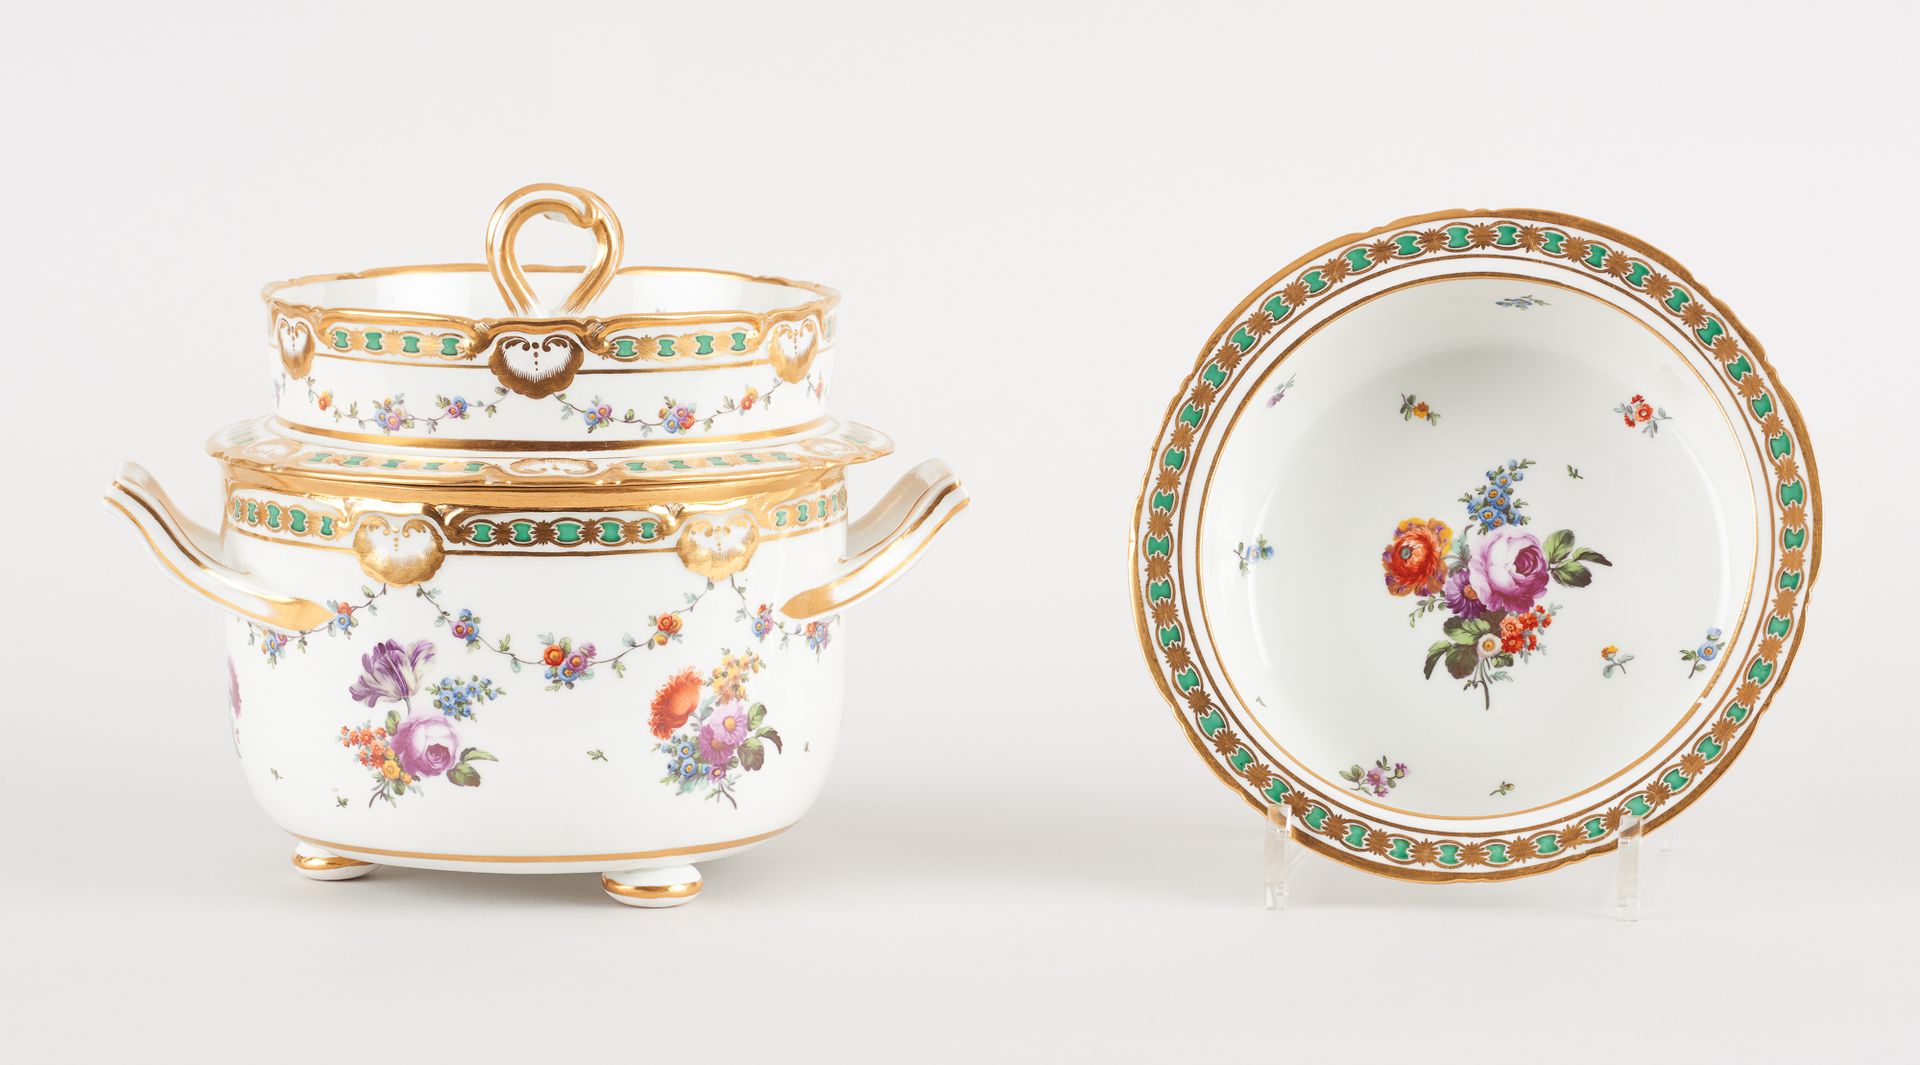 Travail viennois. Ceramic: Polychrome porcelain refreshment stand with floral de&hellip;